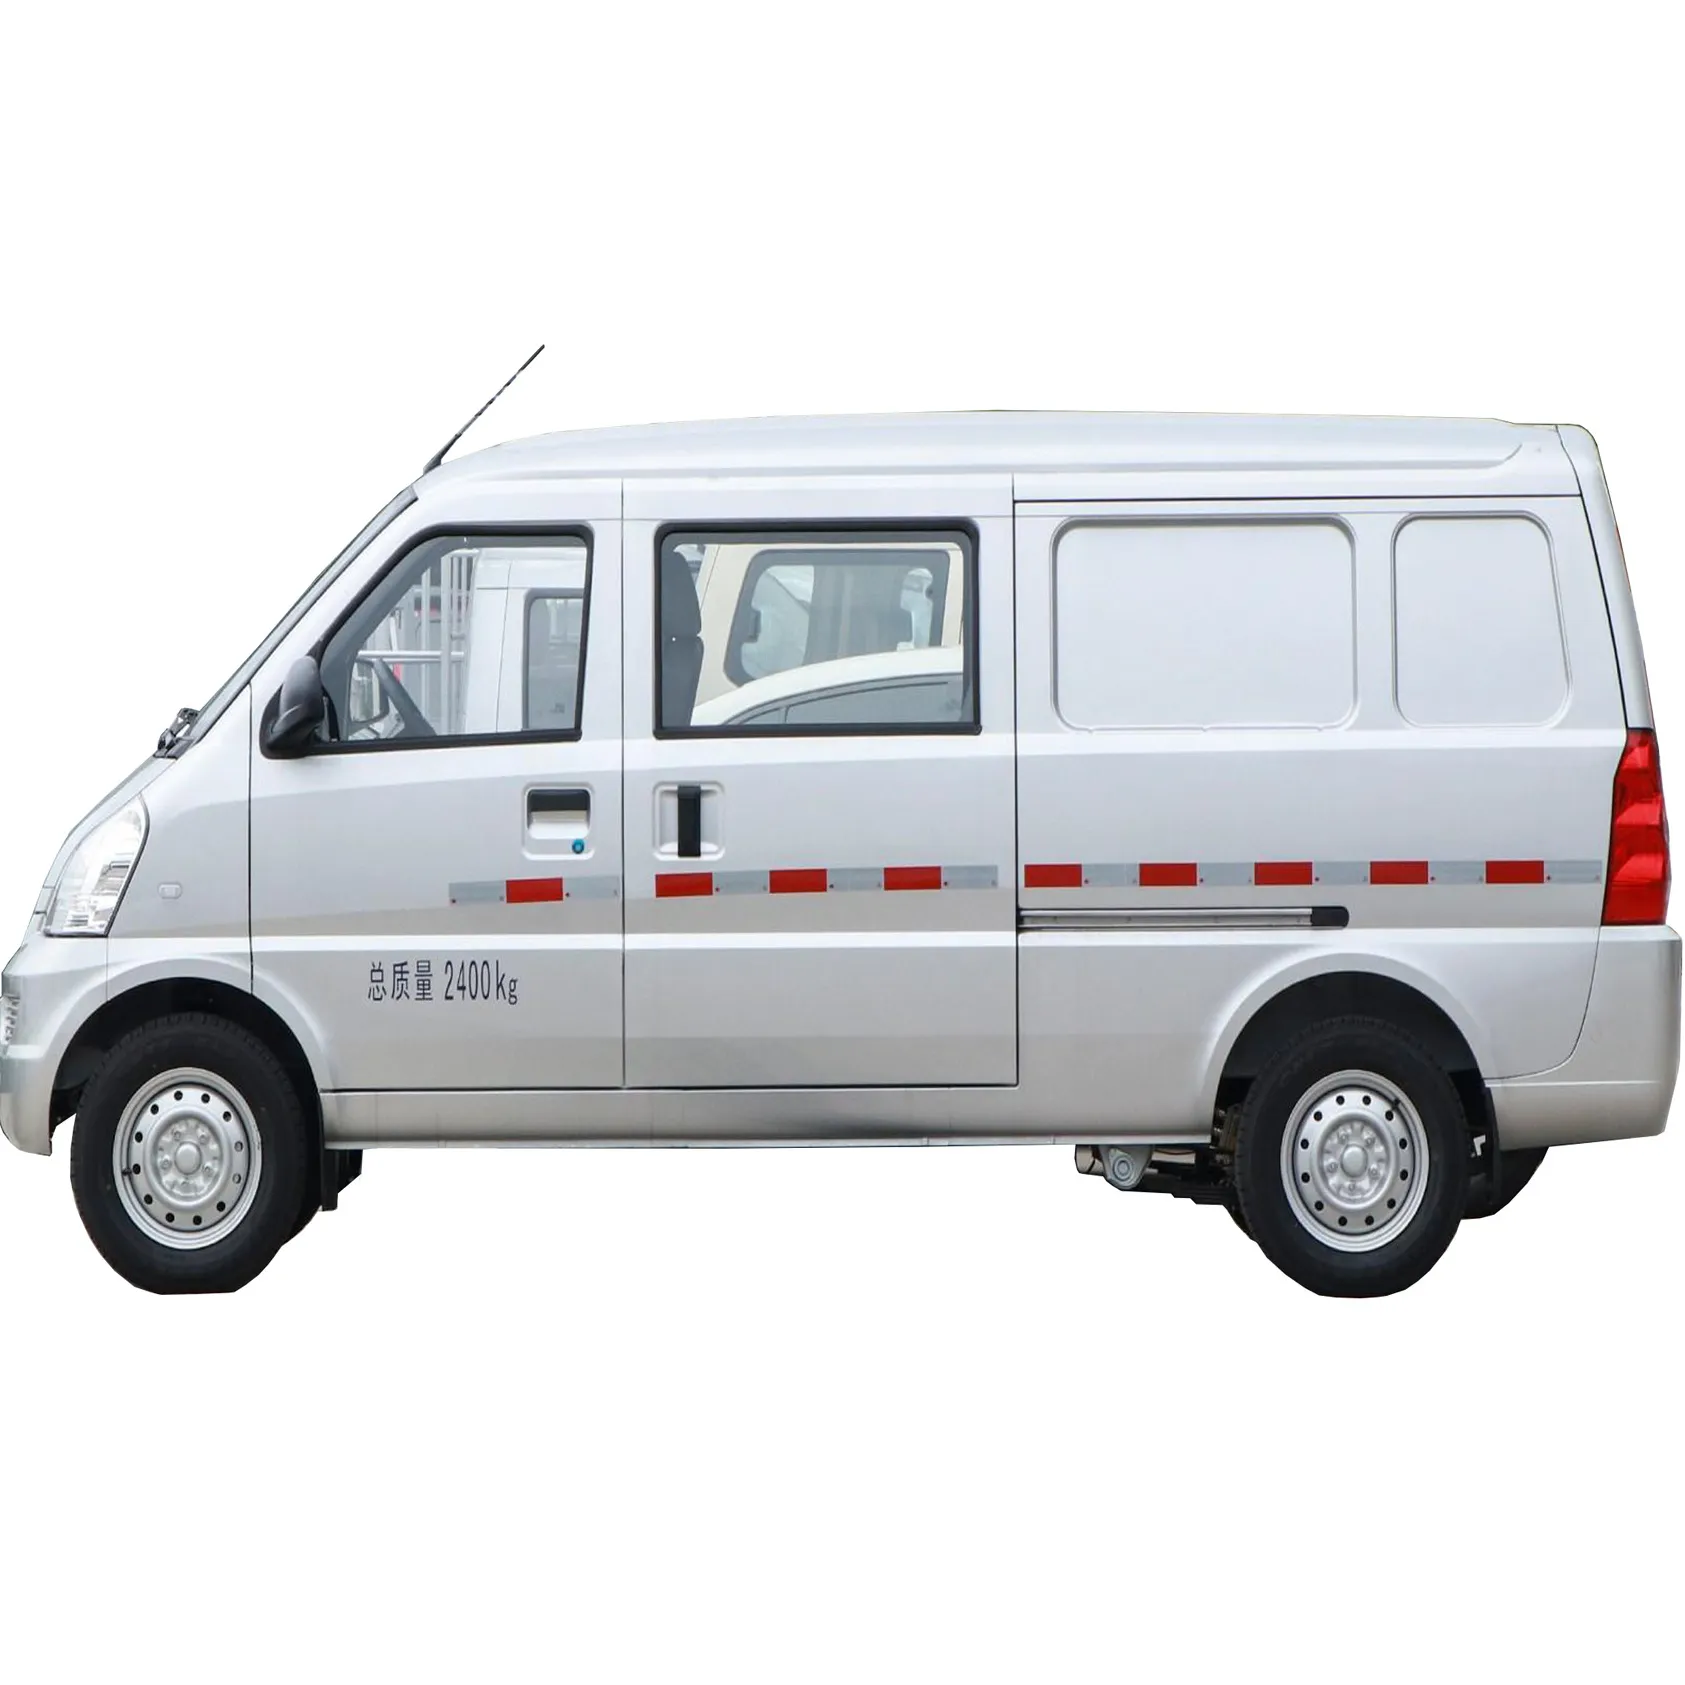 LHD ev car SGMV wuling rongguang new energy vehicle 300km minibus high speed motor van electric minivan for sale